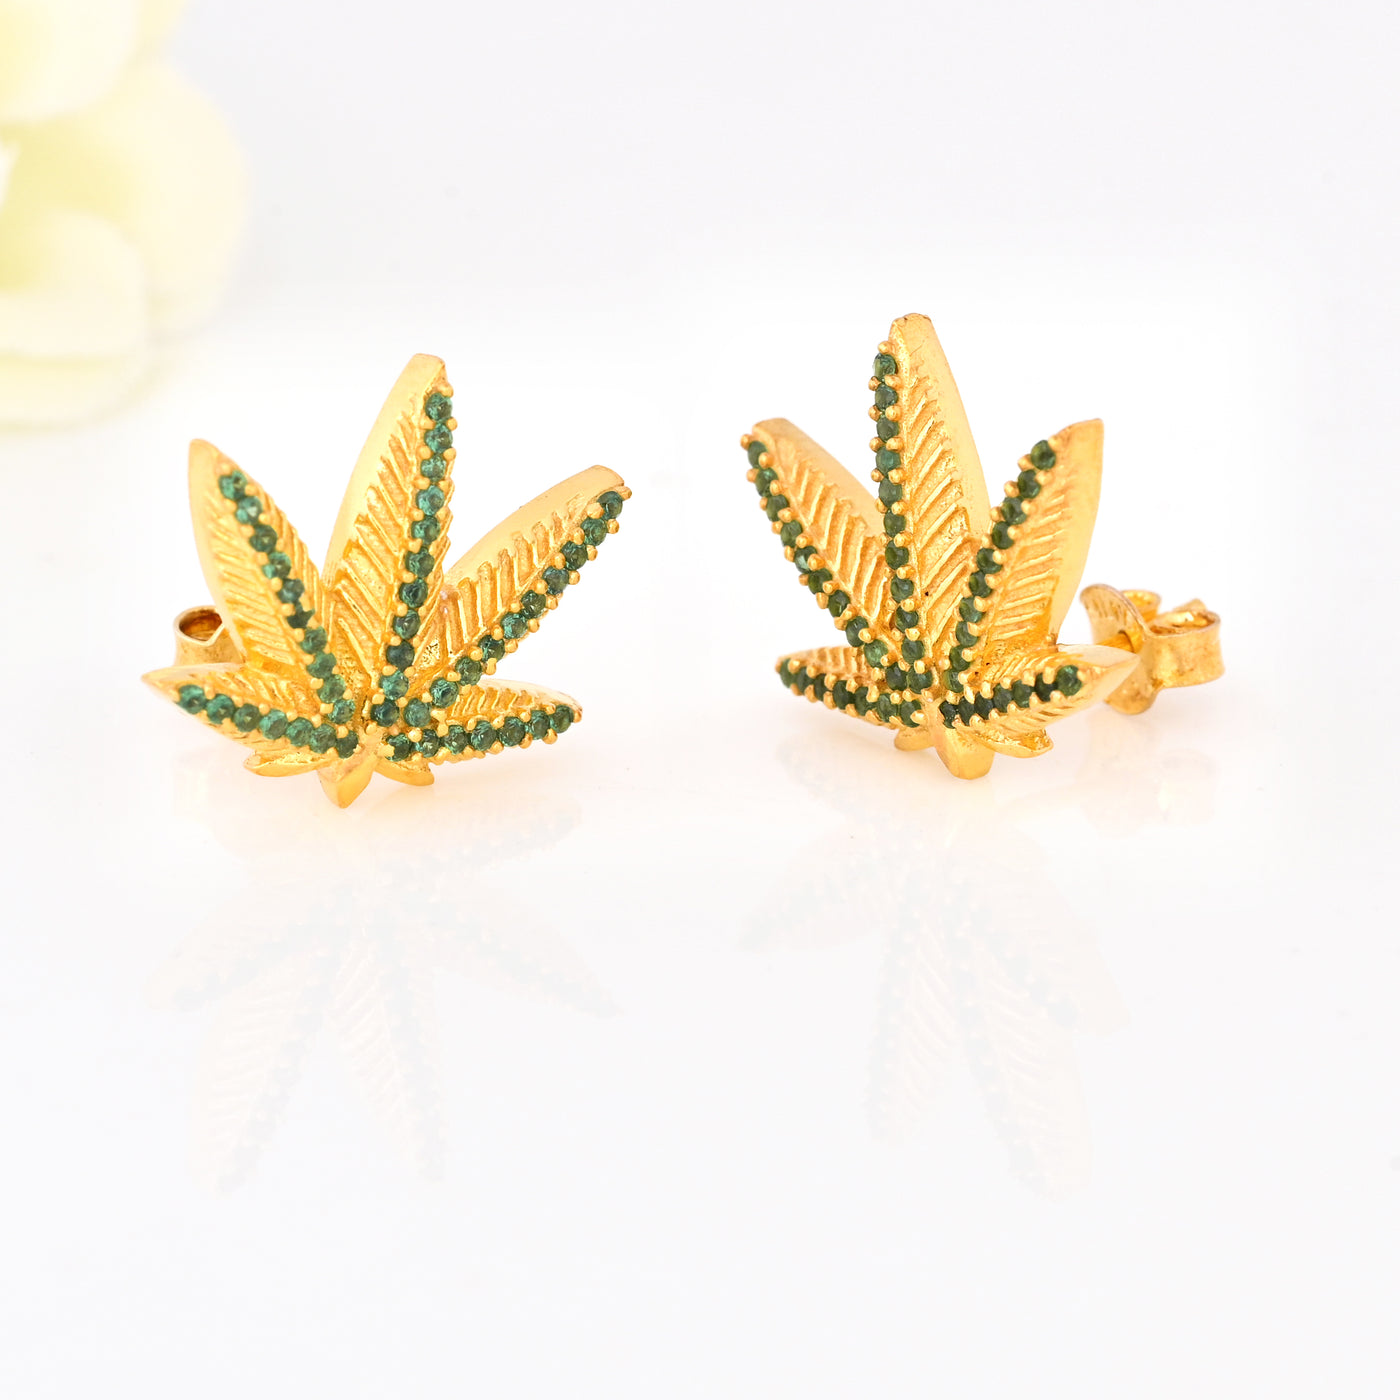 14K Gold Plated Green Emerald Marijuana Pot Leaf Stud Earrings